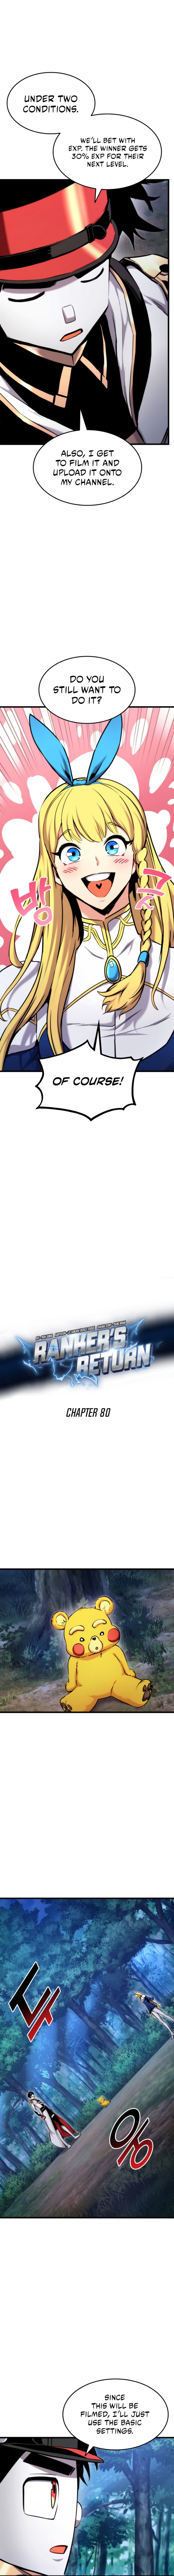 Ranker’s Return (Remake) - Chapter 80 Page 2